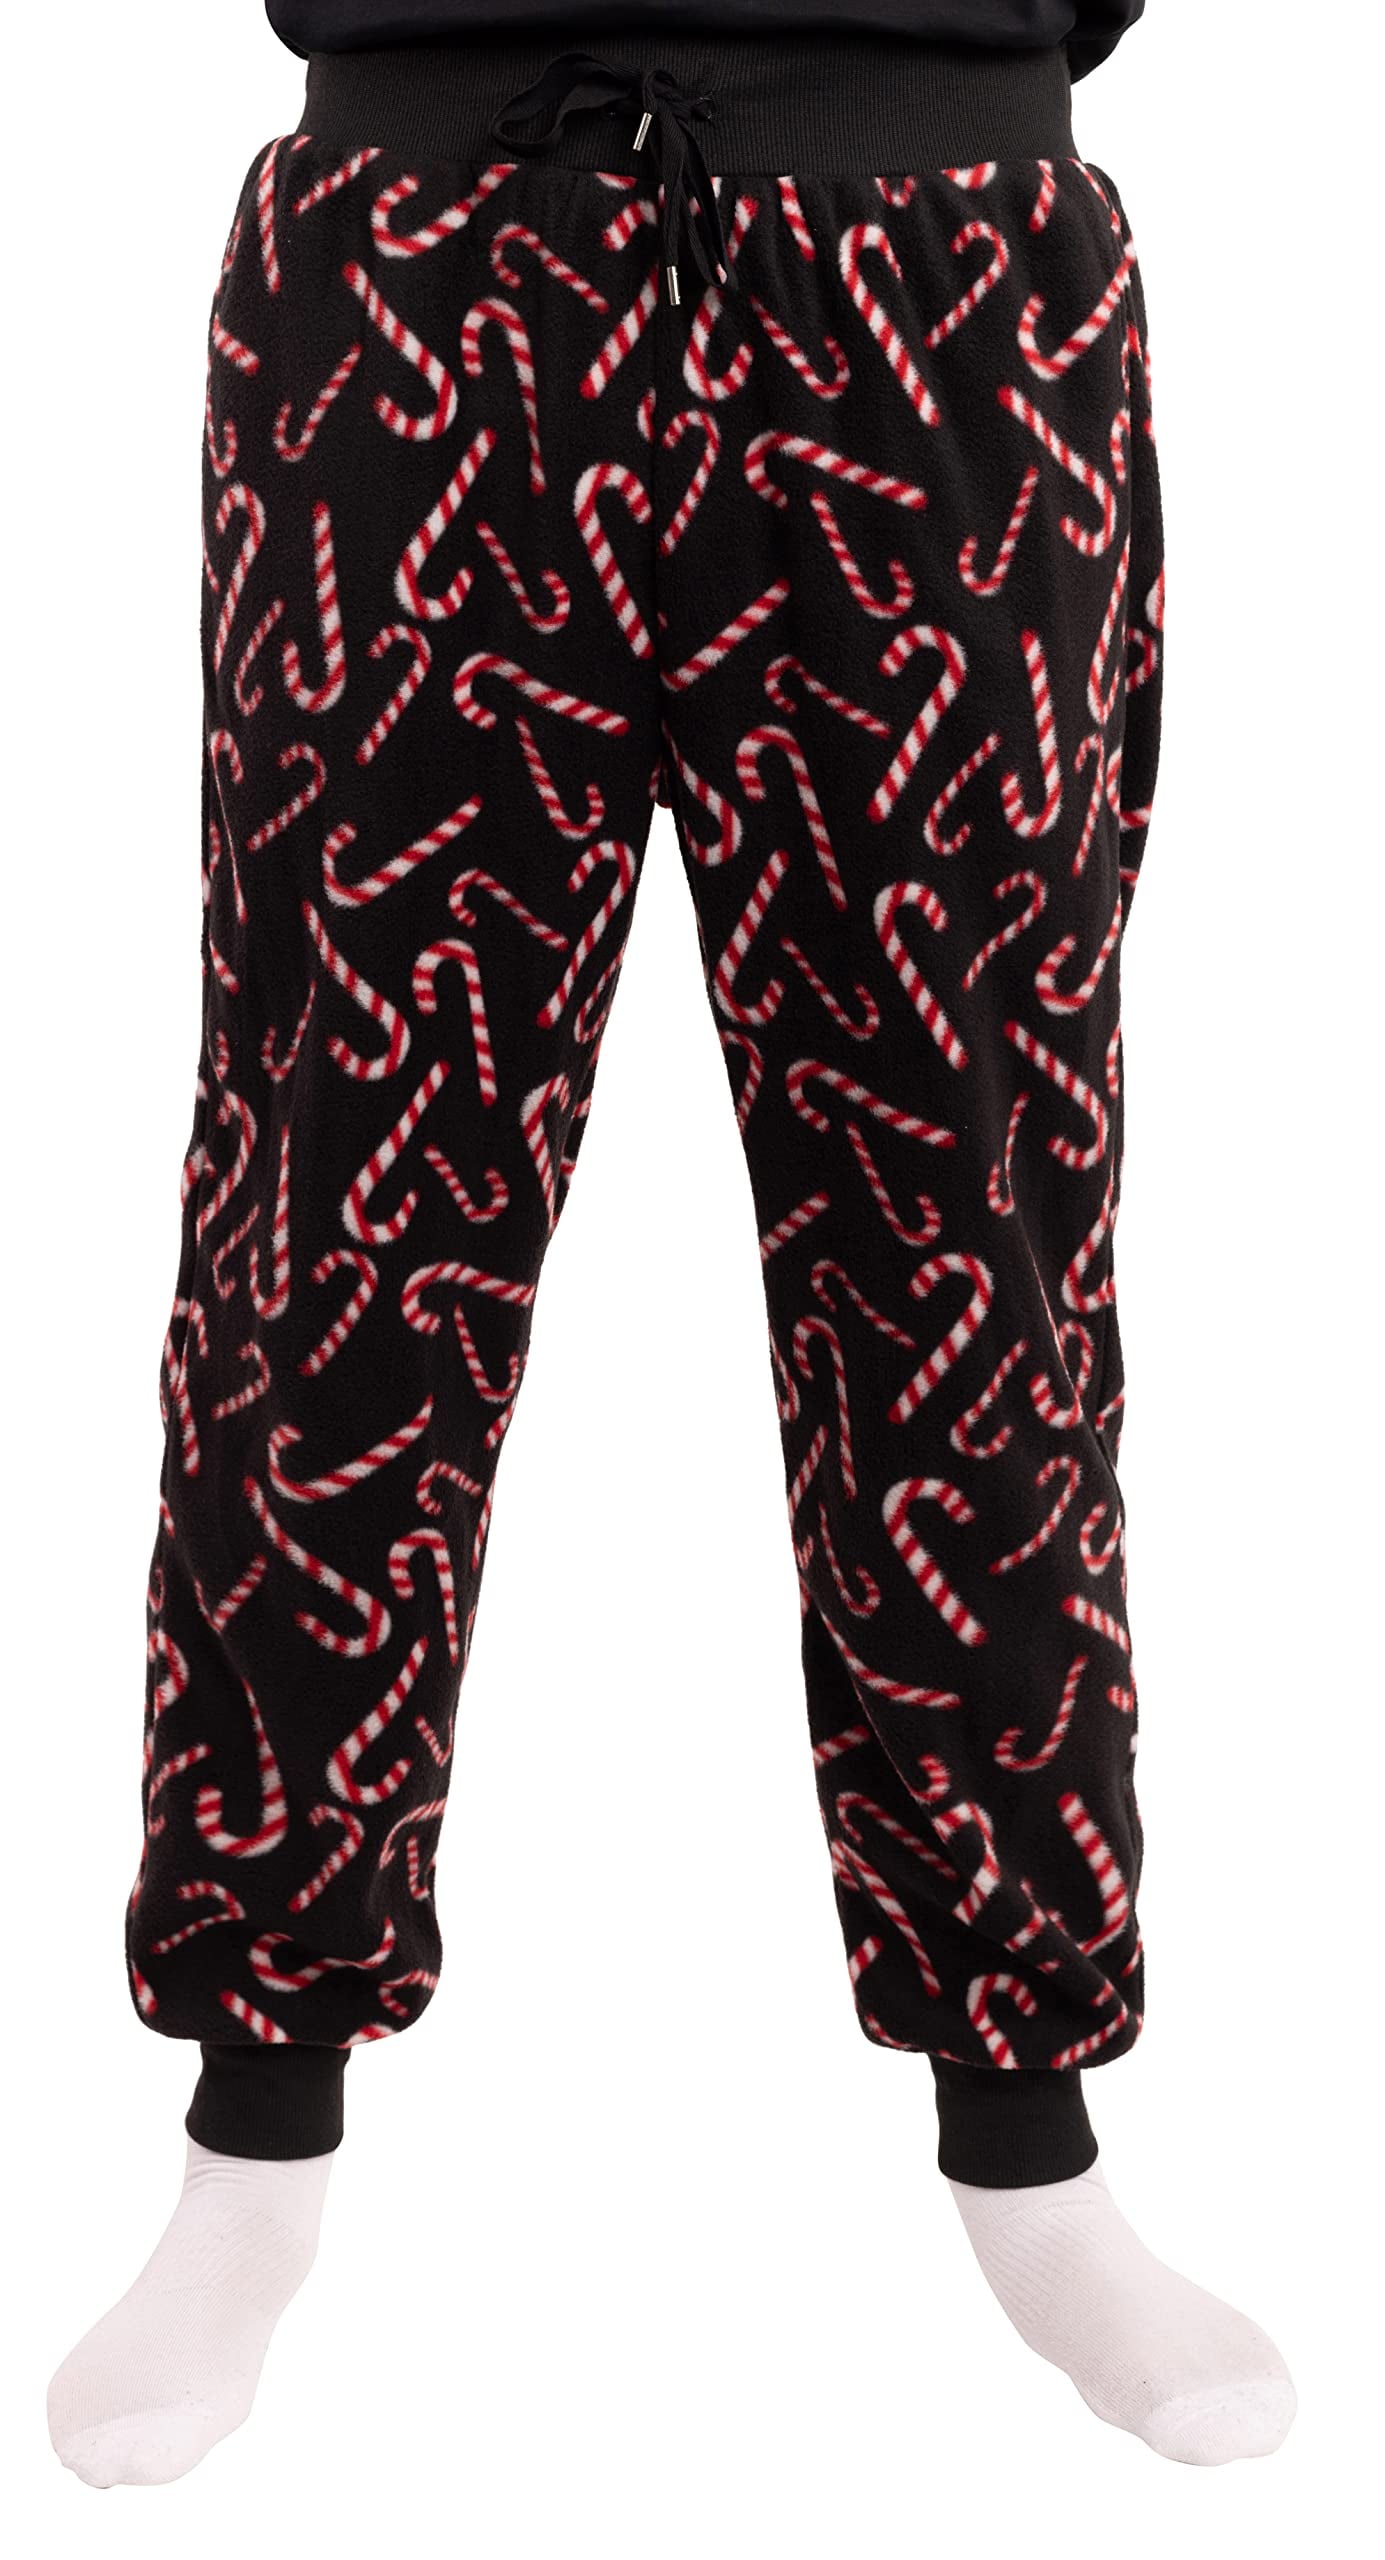 followMe Men's Microfleece Buffalo Plaid Pajama Pants with Pockets:  Comfortable Joggers (Red and Black Buffalo Plaid Jogger, Medium) 